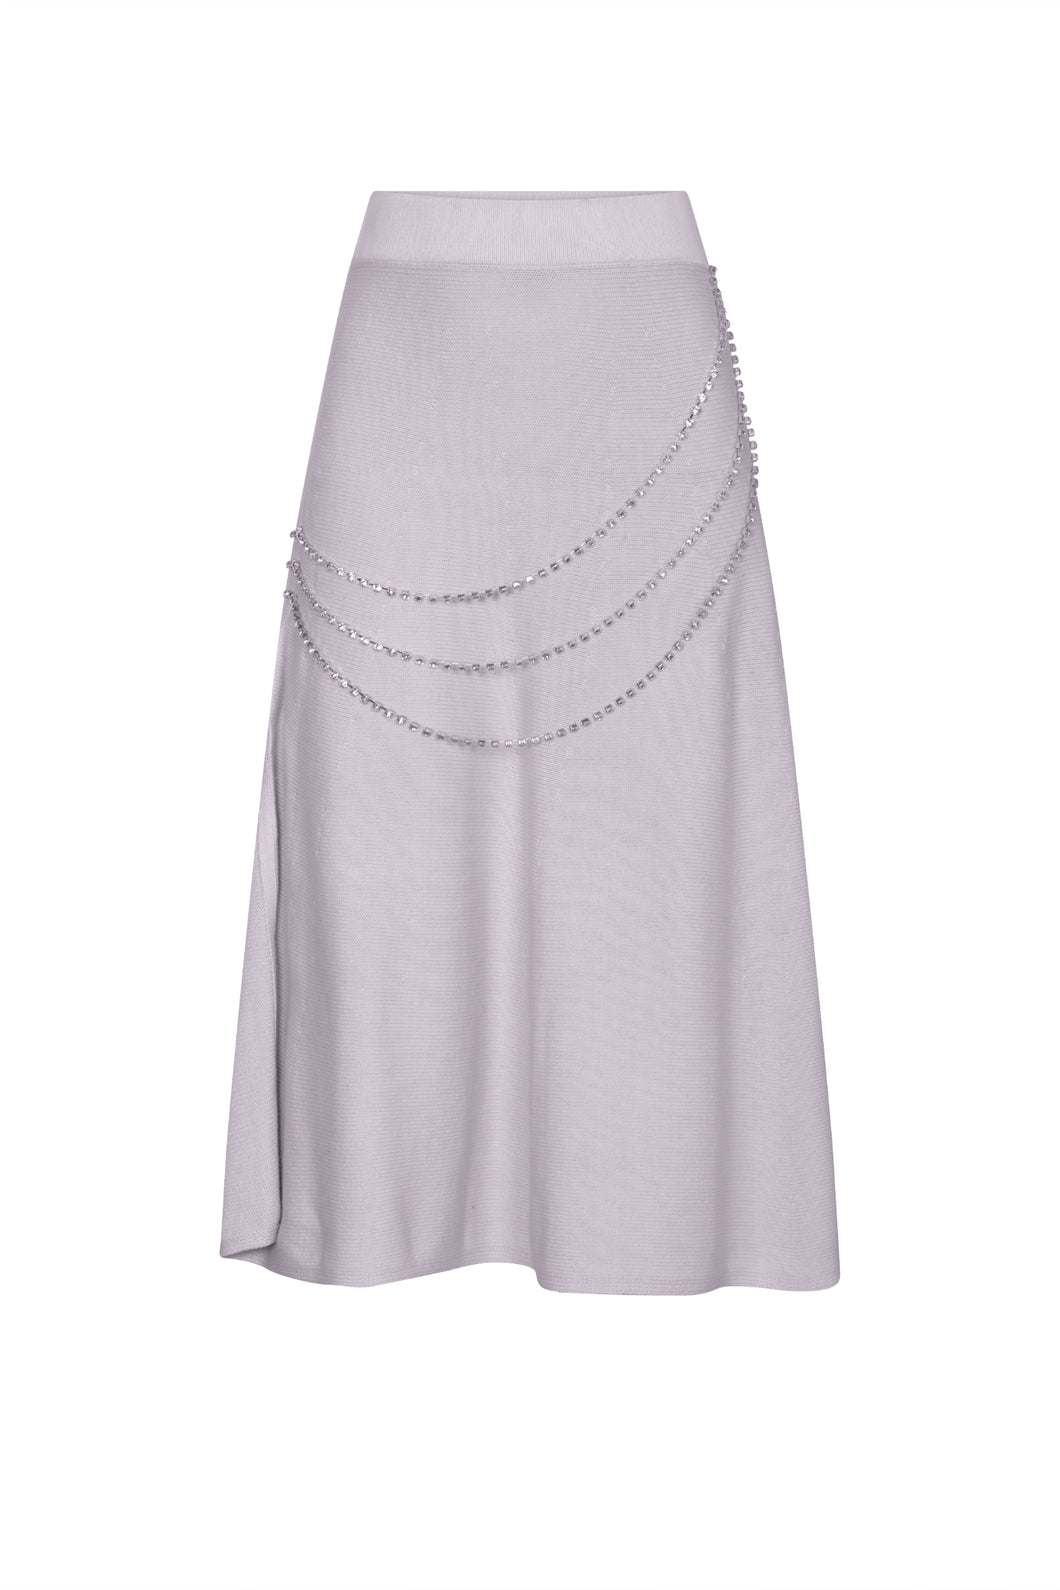 Grey Crystal Chain Embellished Skirt